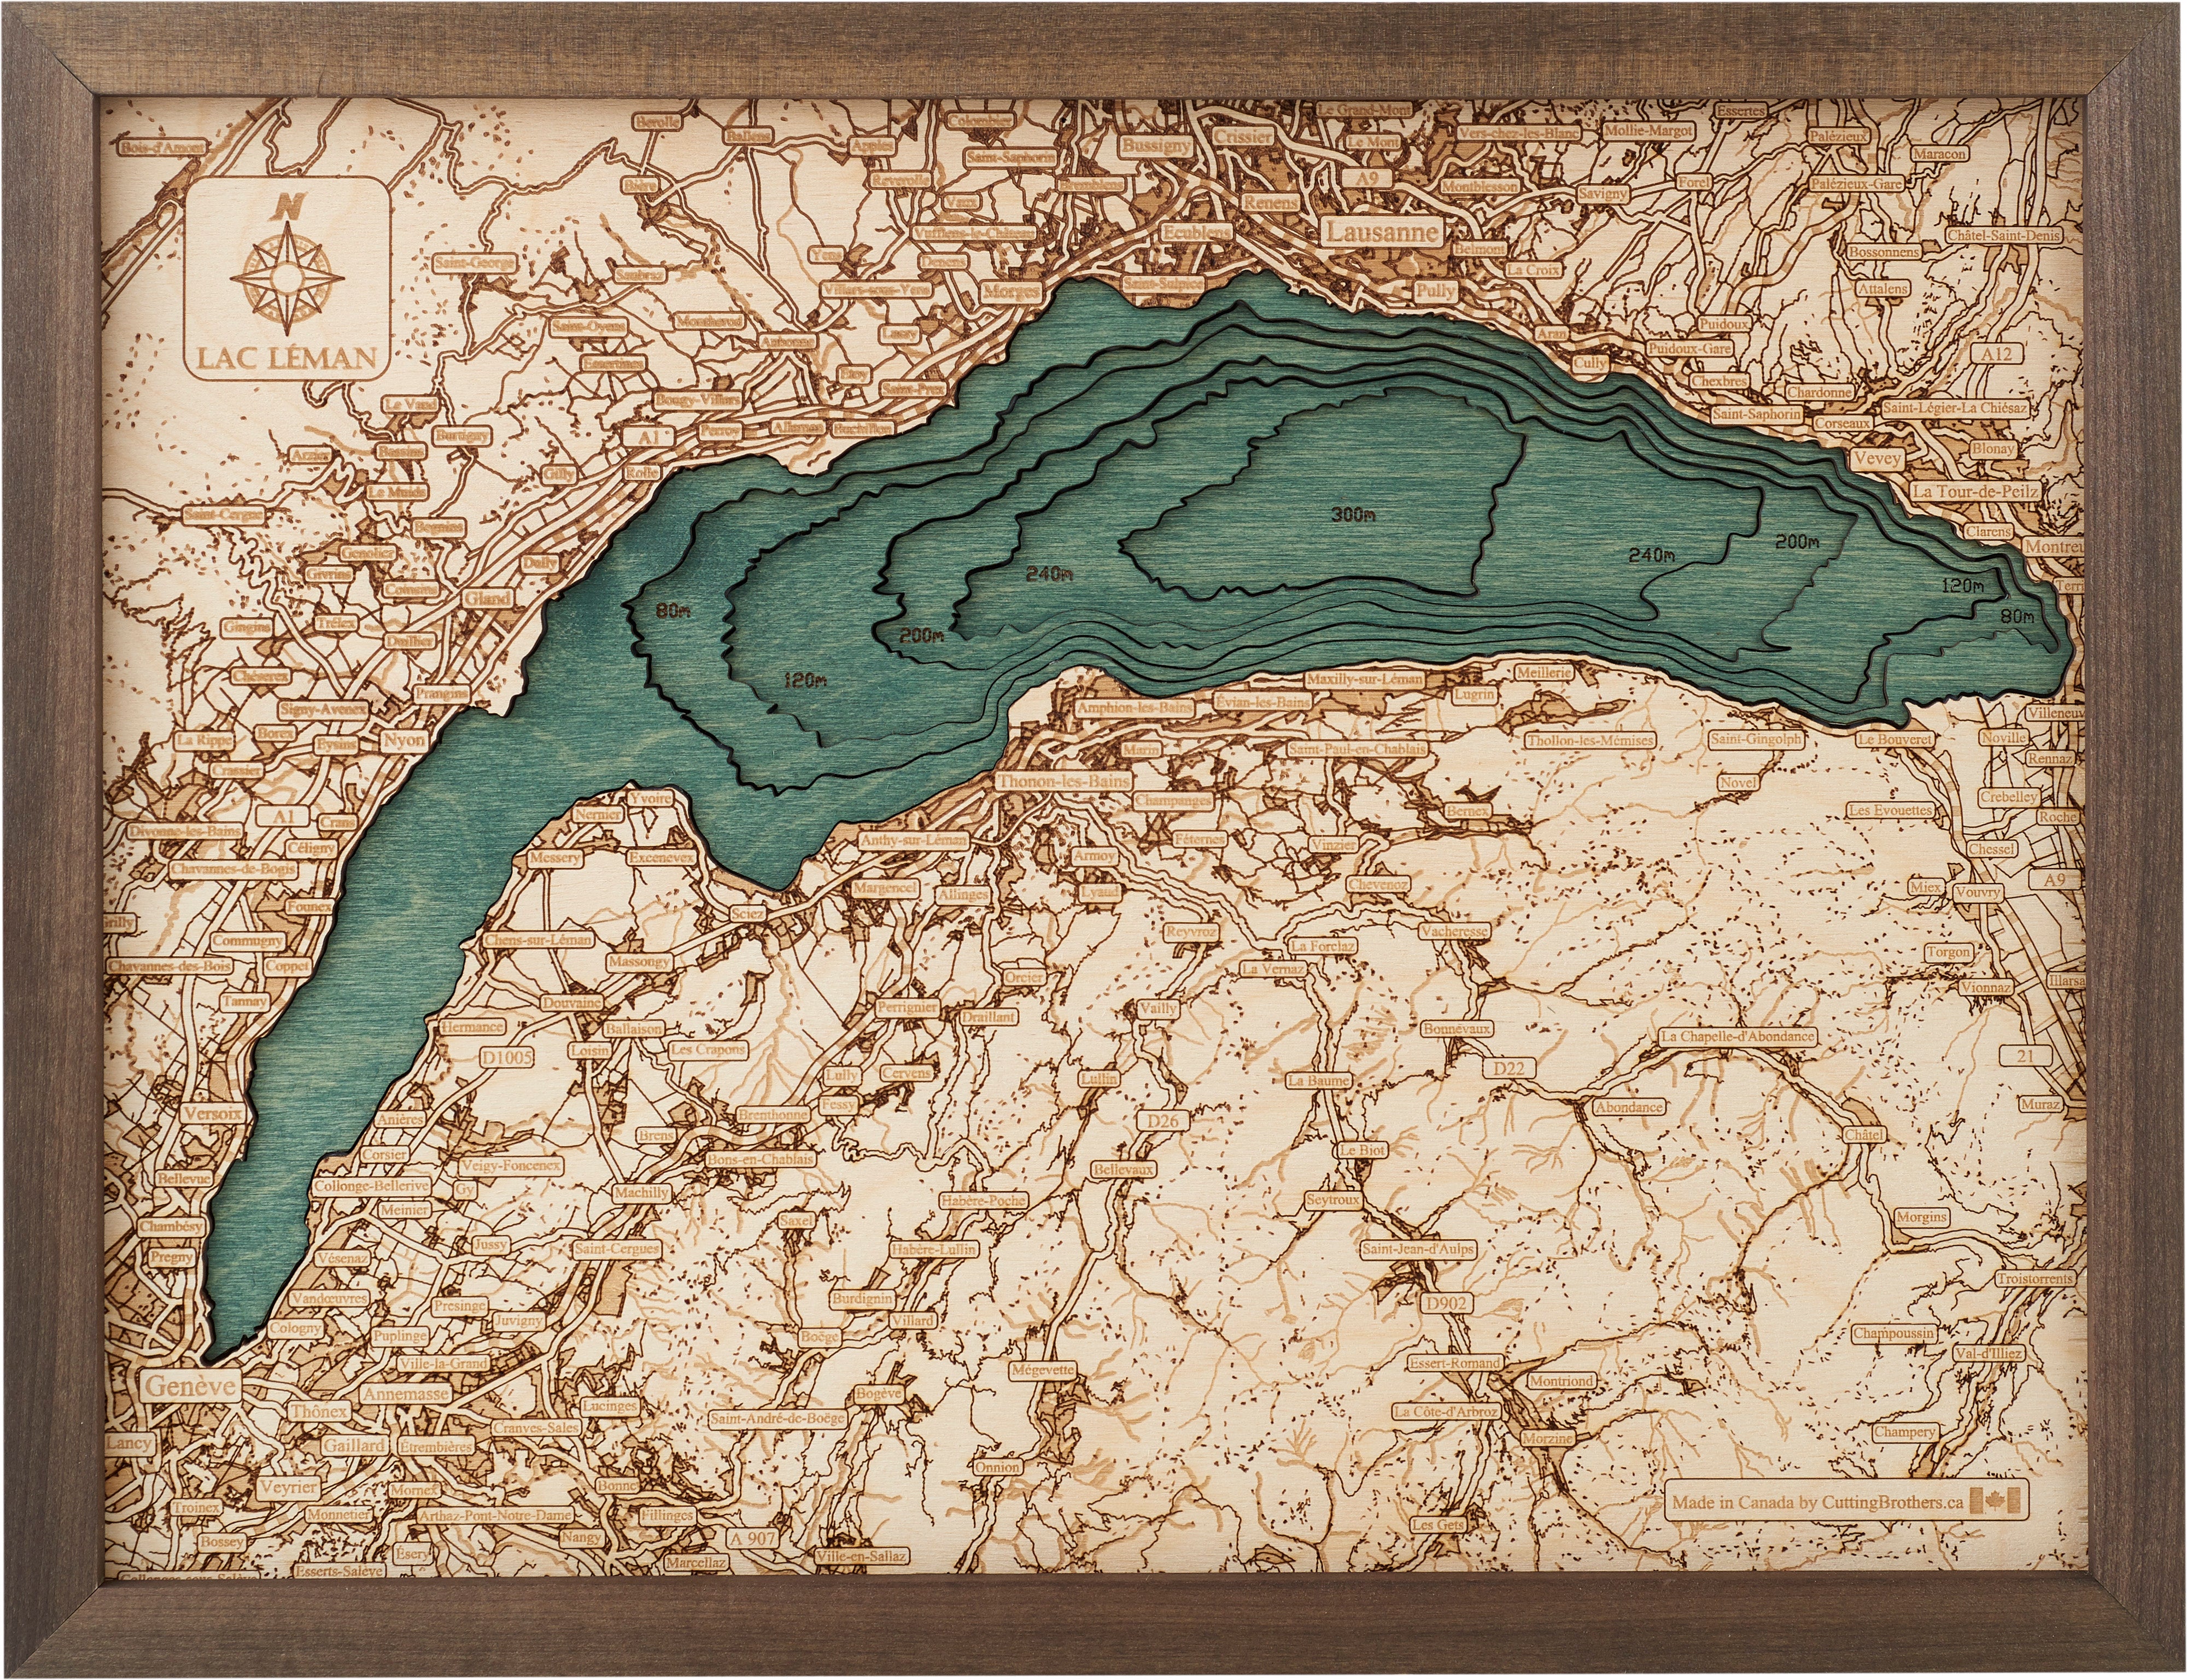 LAC LEMAN LAKE GENEVA 3D Wooden Wall Map - Version S